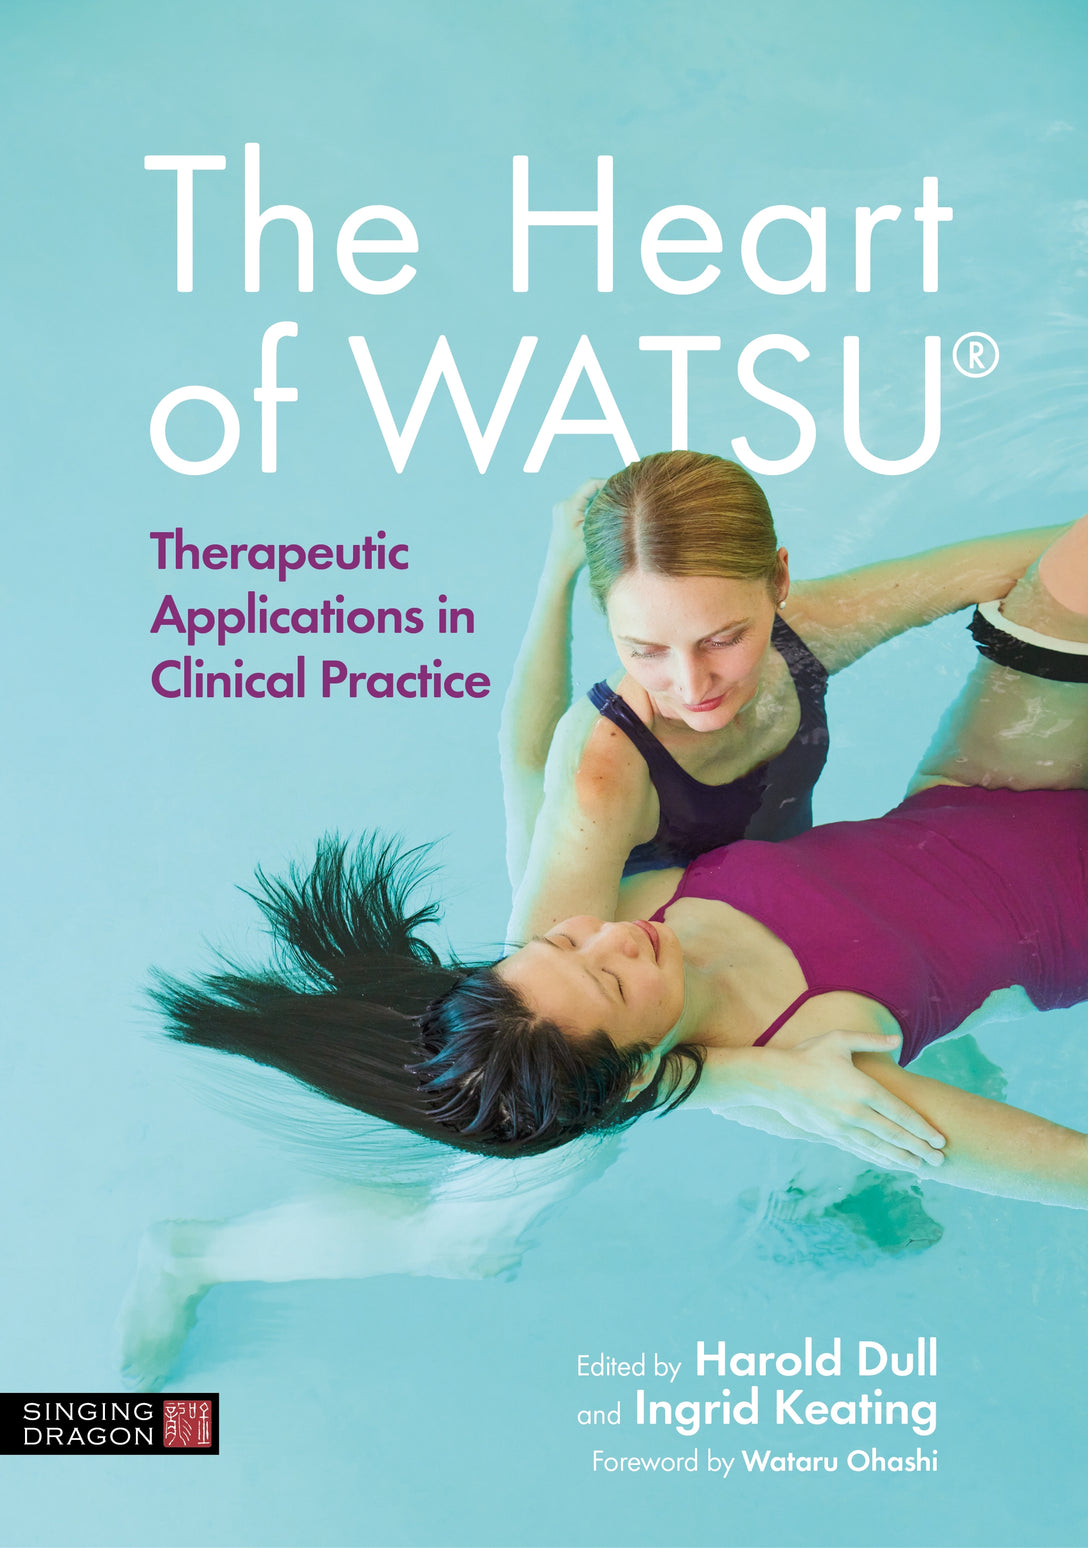 The Heart of WATSU® by Ingrid Keating, Harold Dull, No Author Listed, Wataru Ohashi